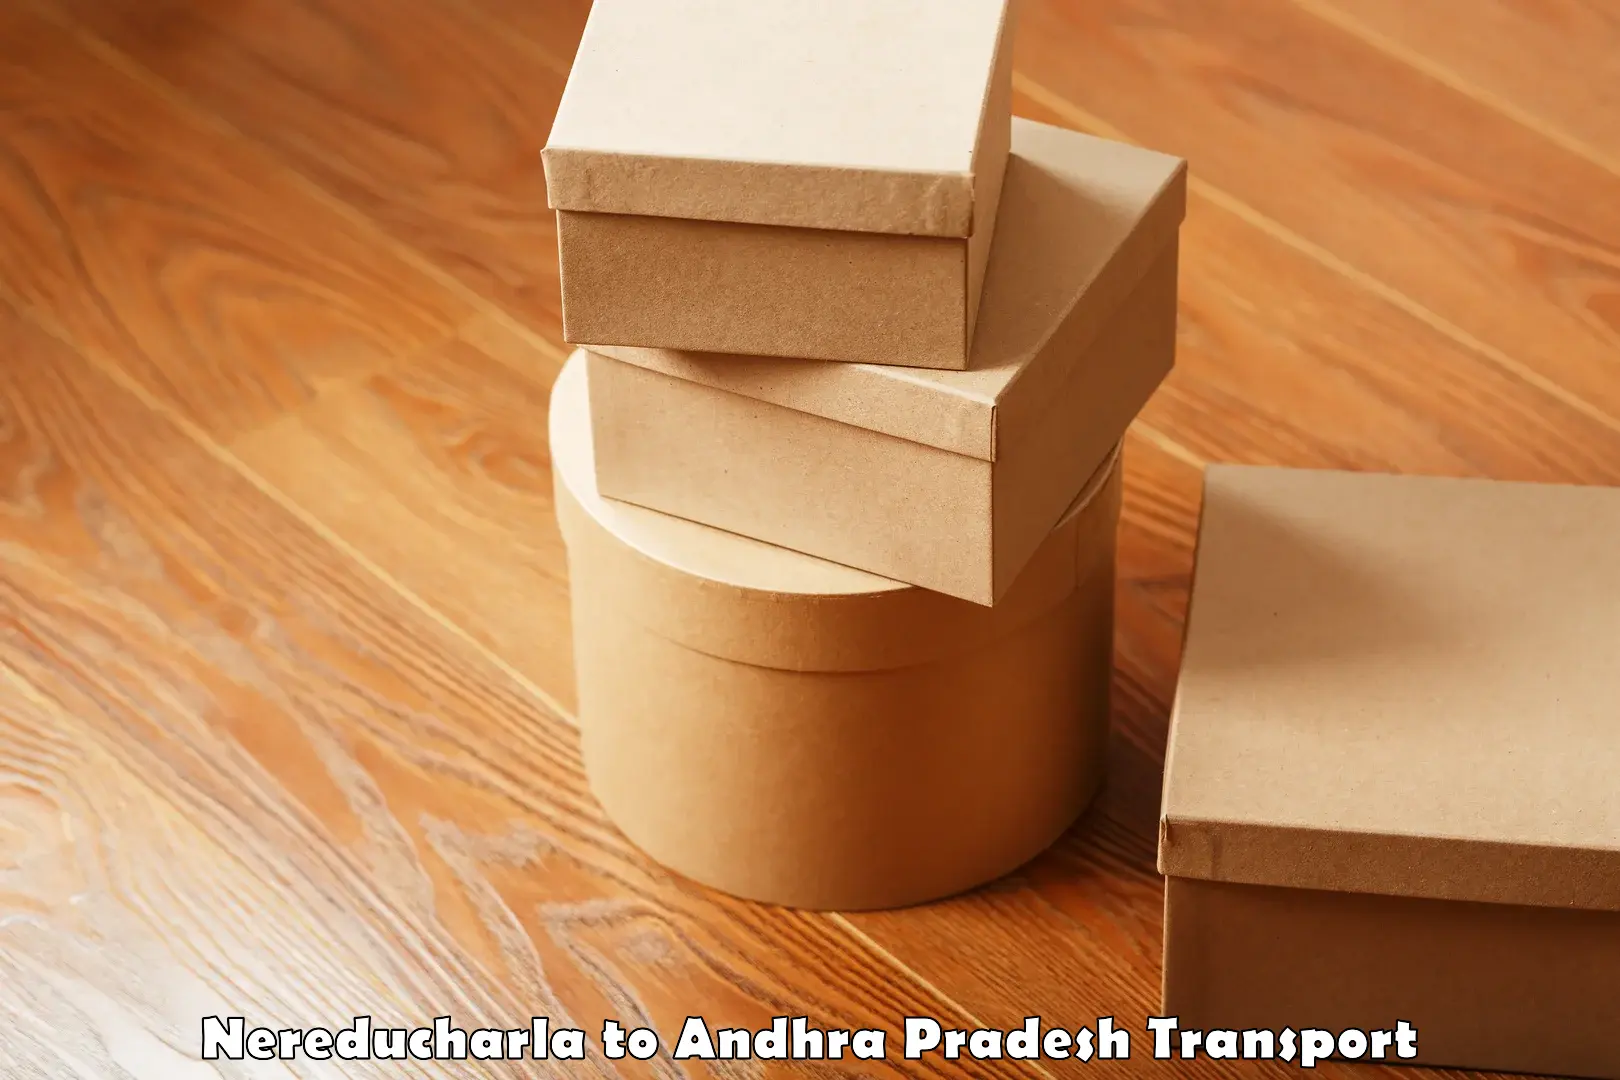 Nearest transport service Nereducharla to Andhra Pradesh